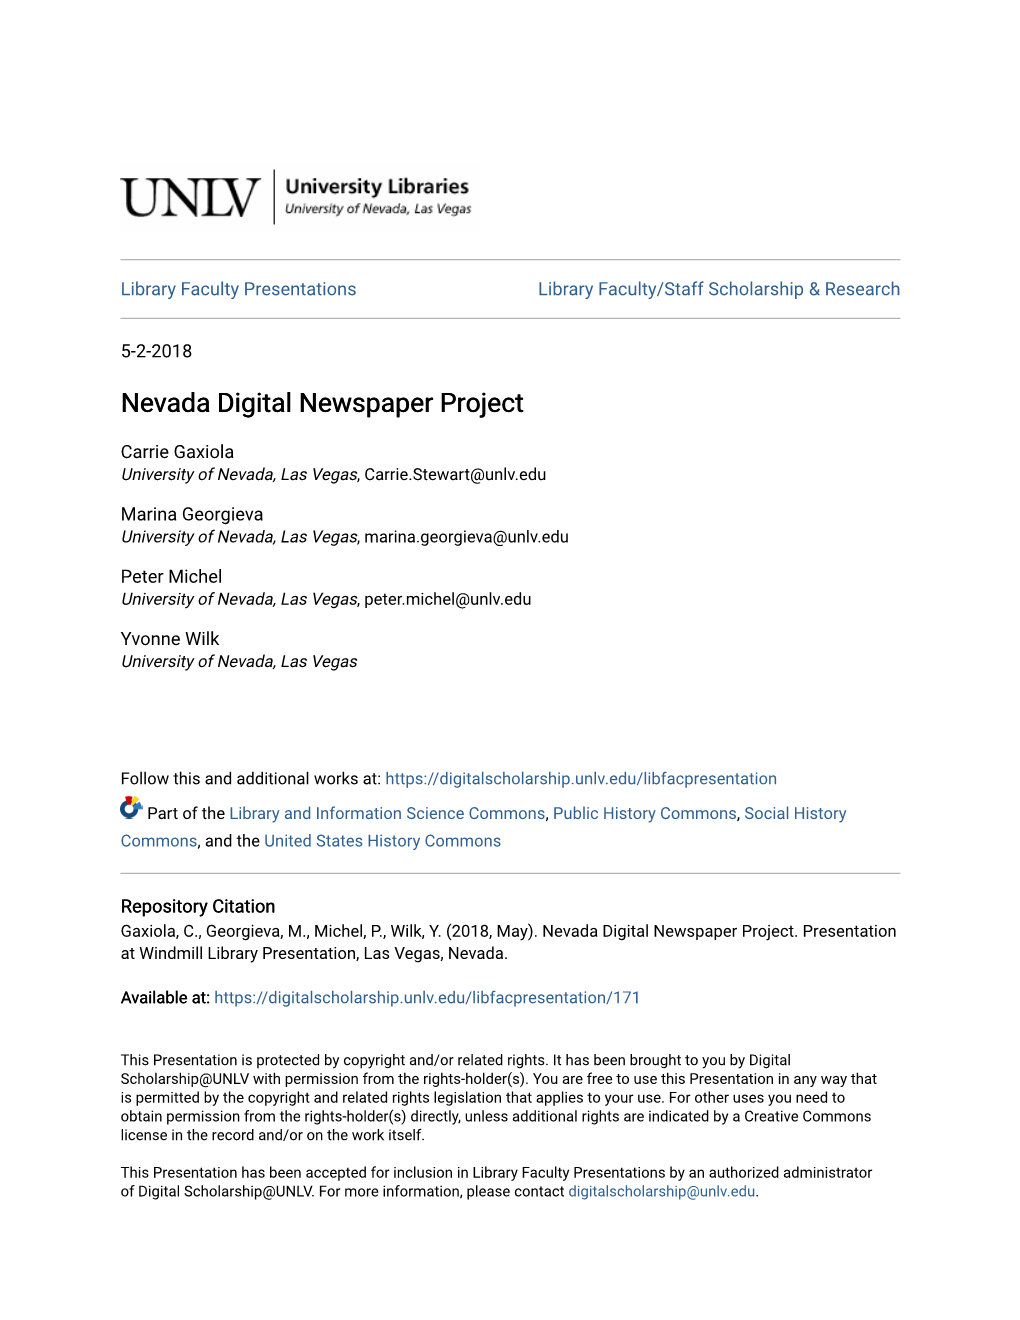 Nevada Digital Newspaper Project